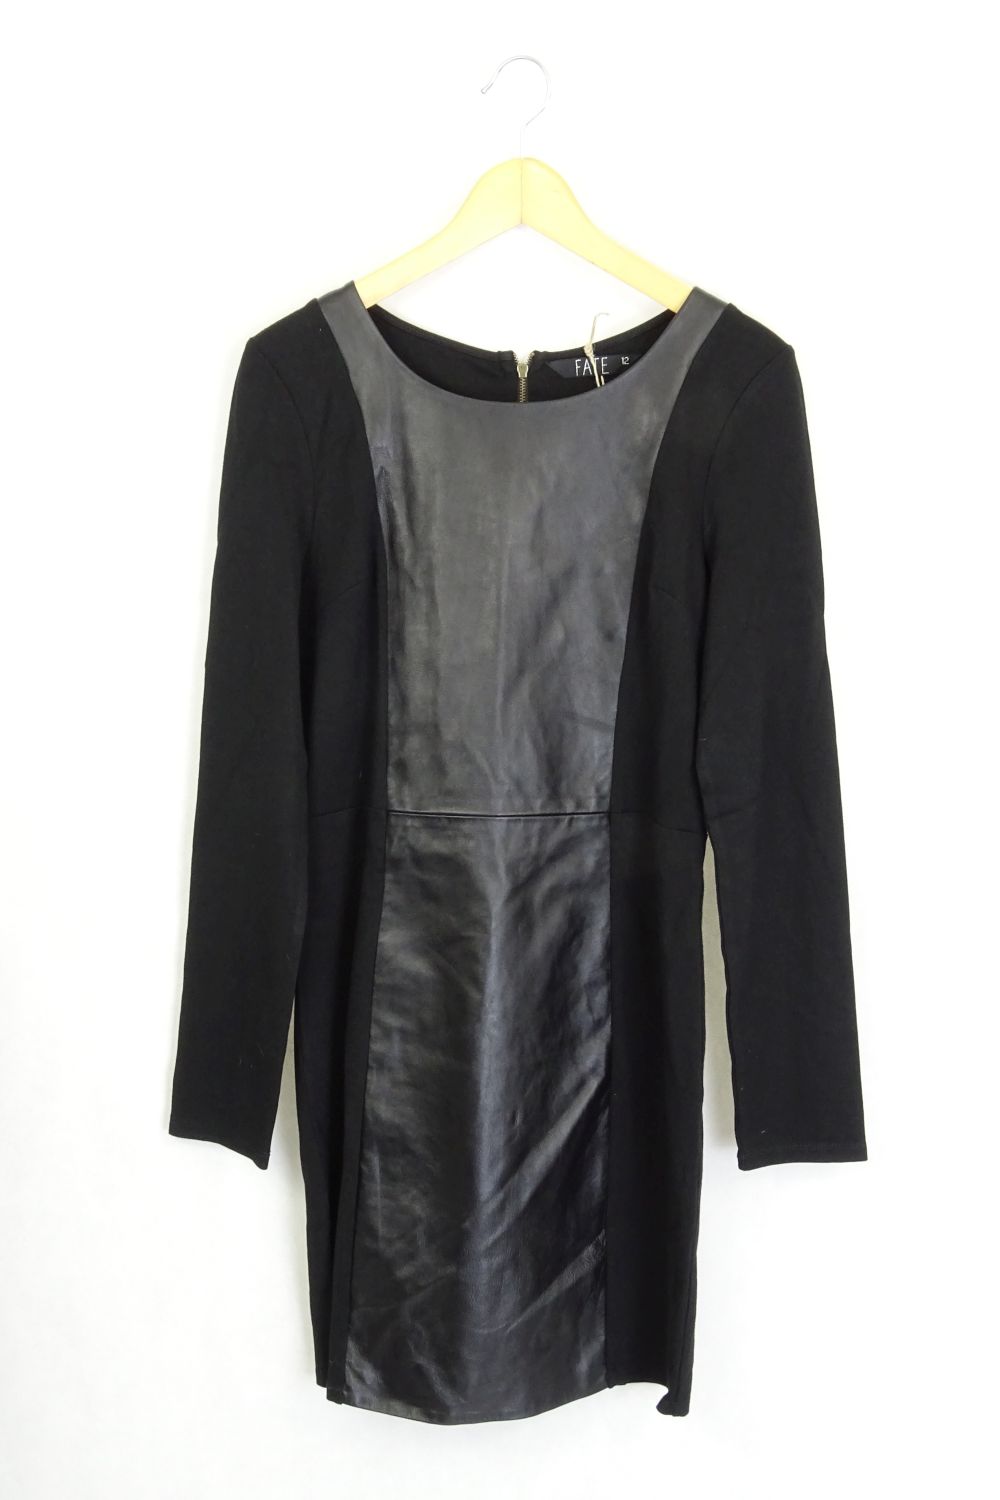 Fate Long Sleeve Black Dress- 12